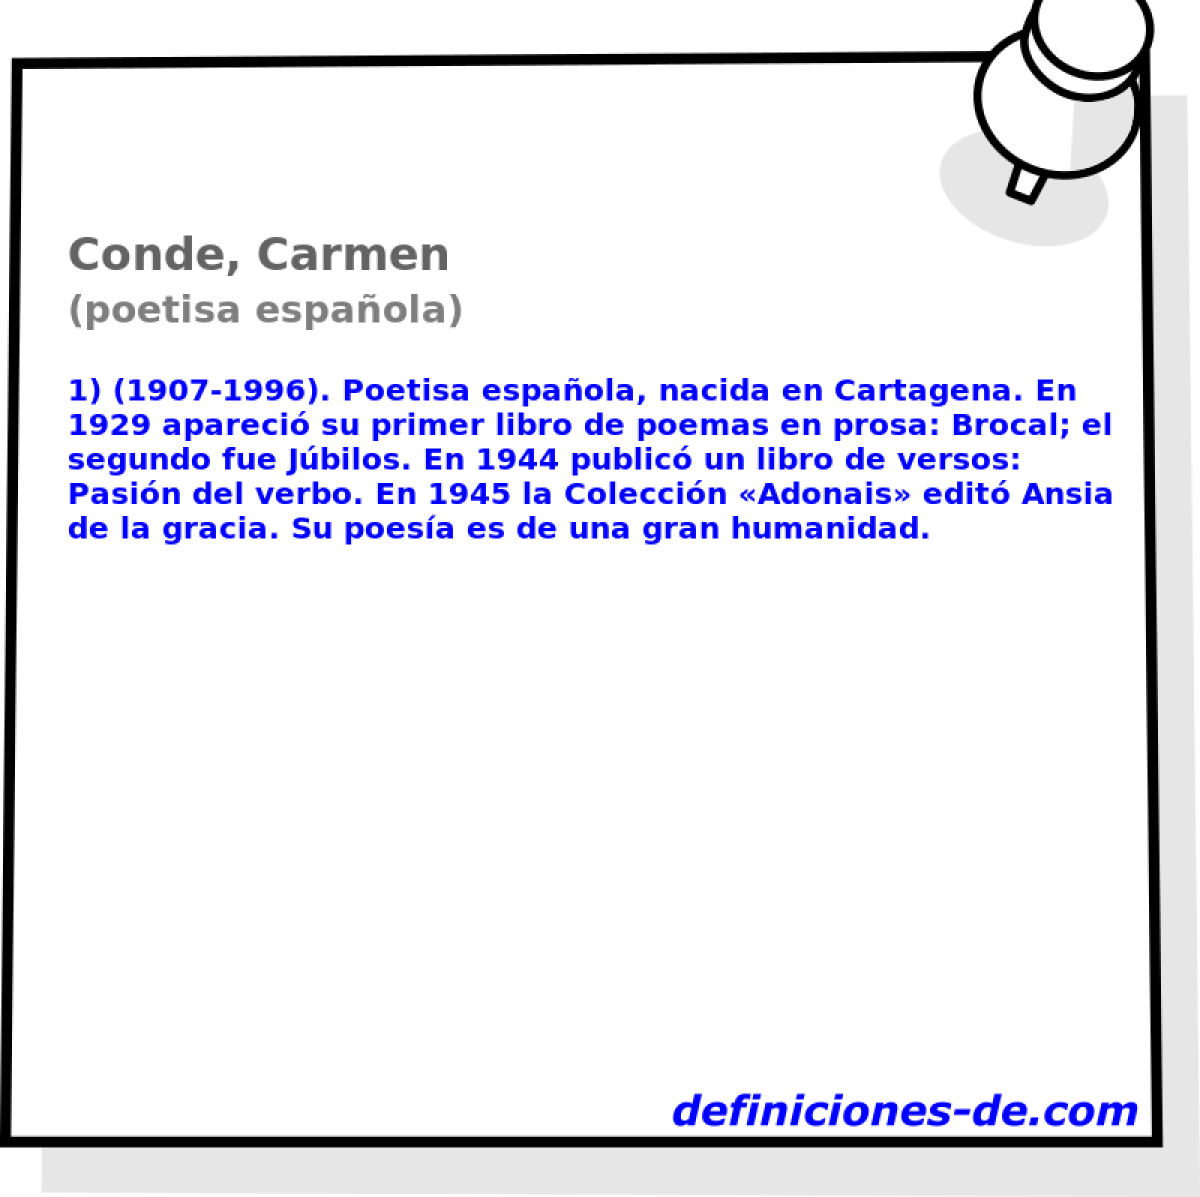 Conde, Carmen (poetisa espaola)